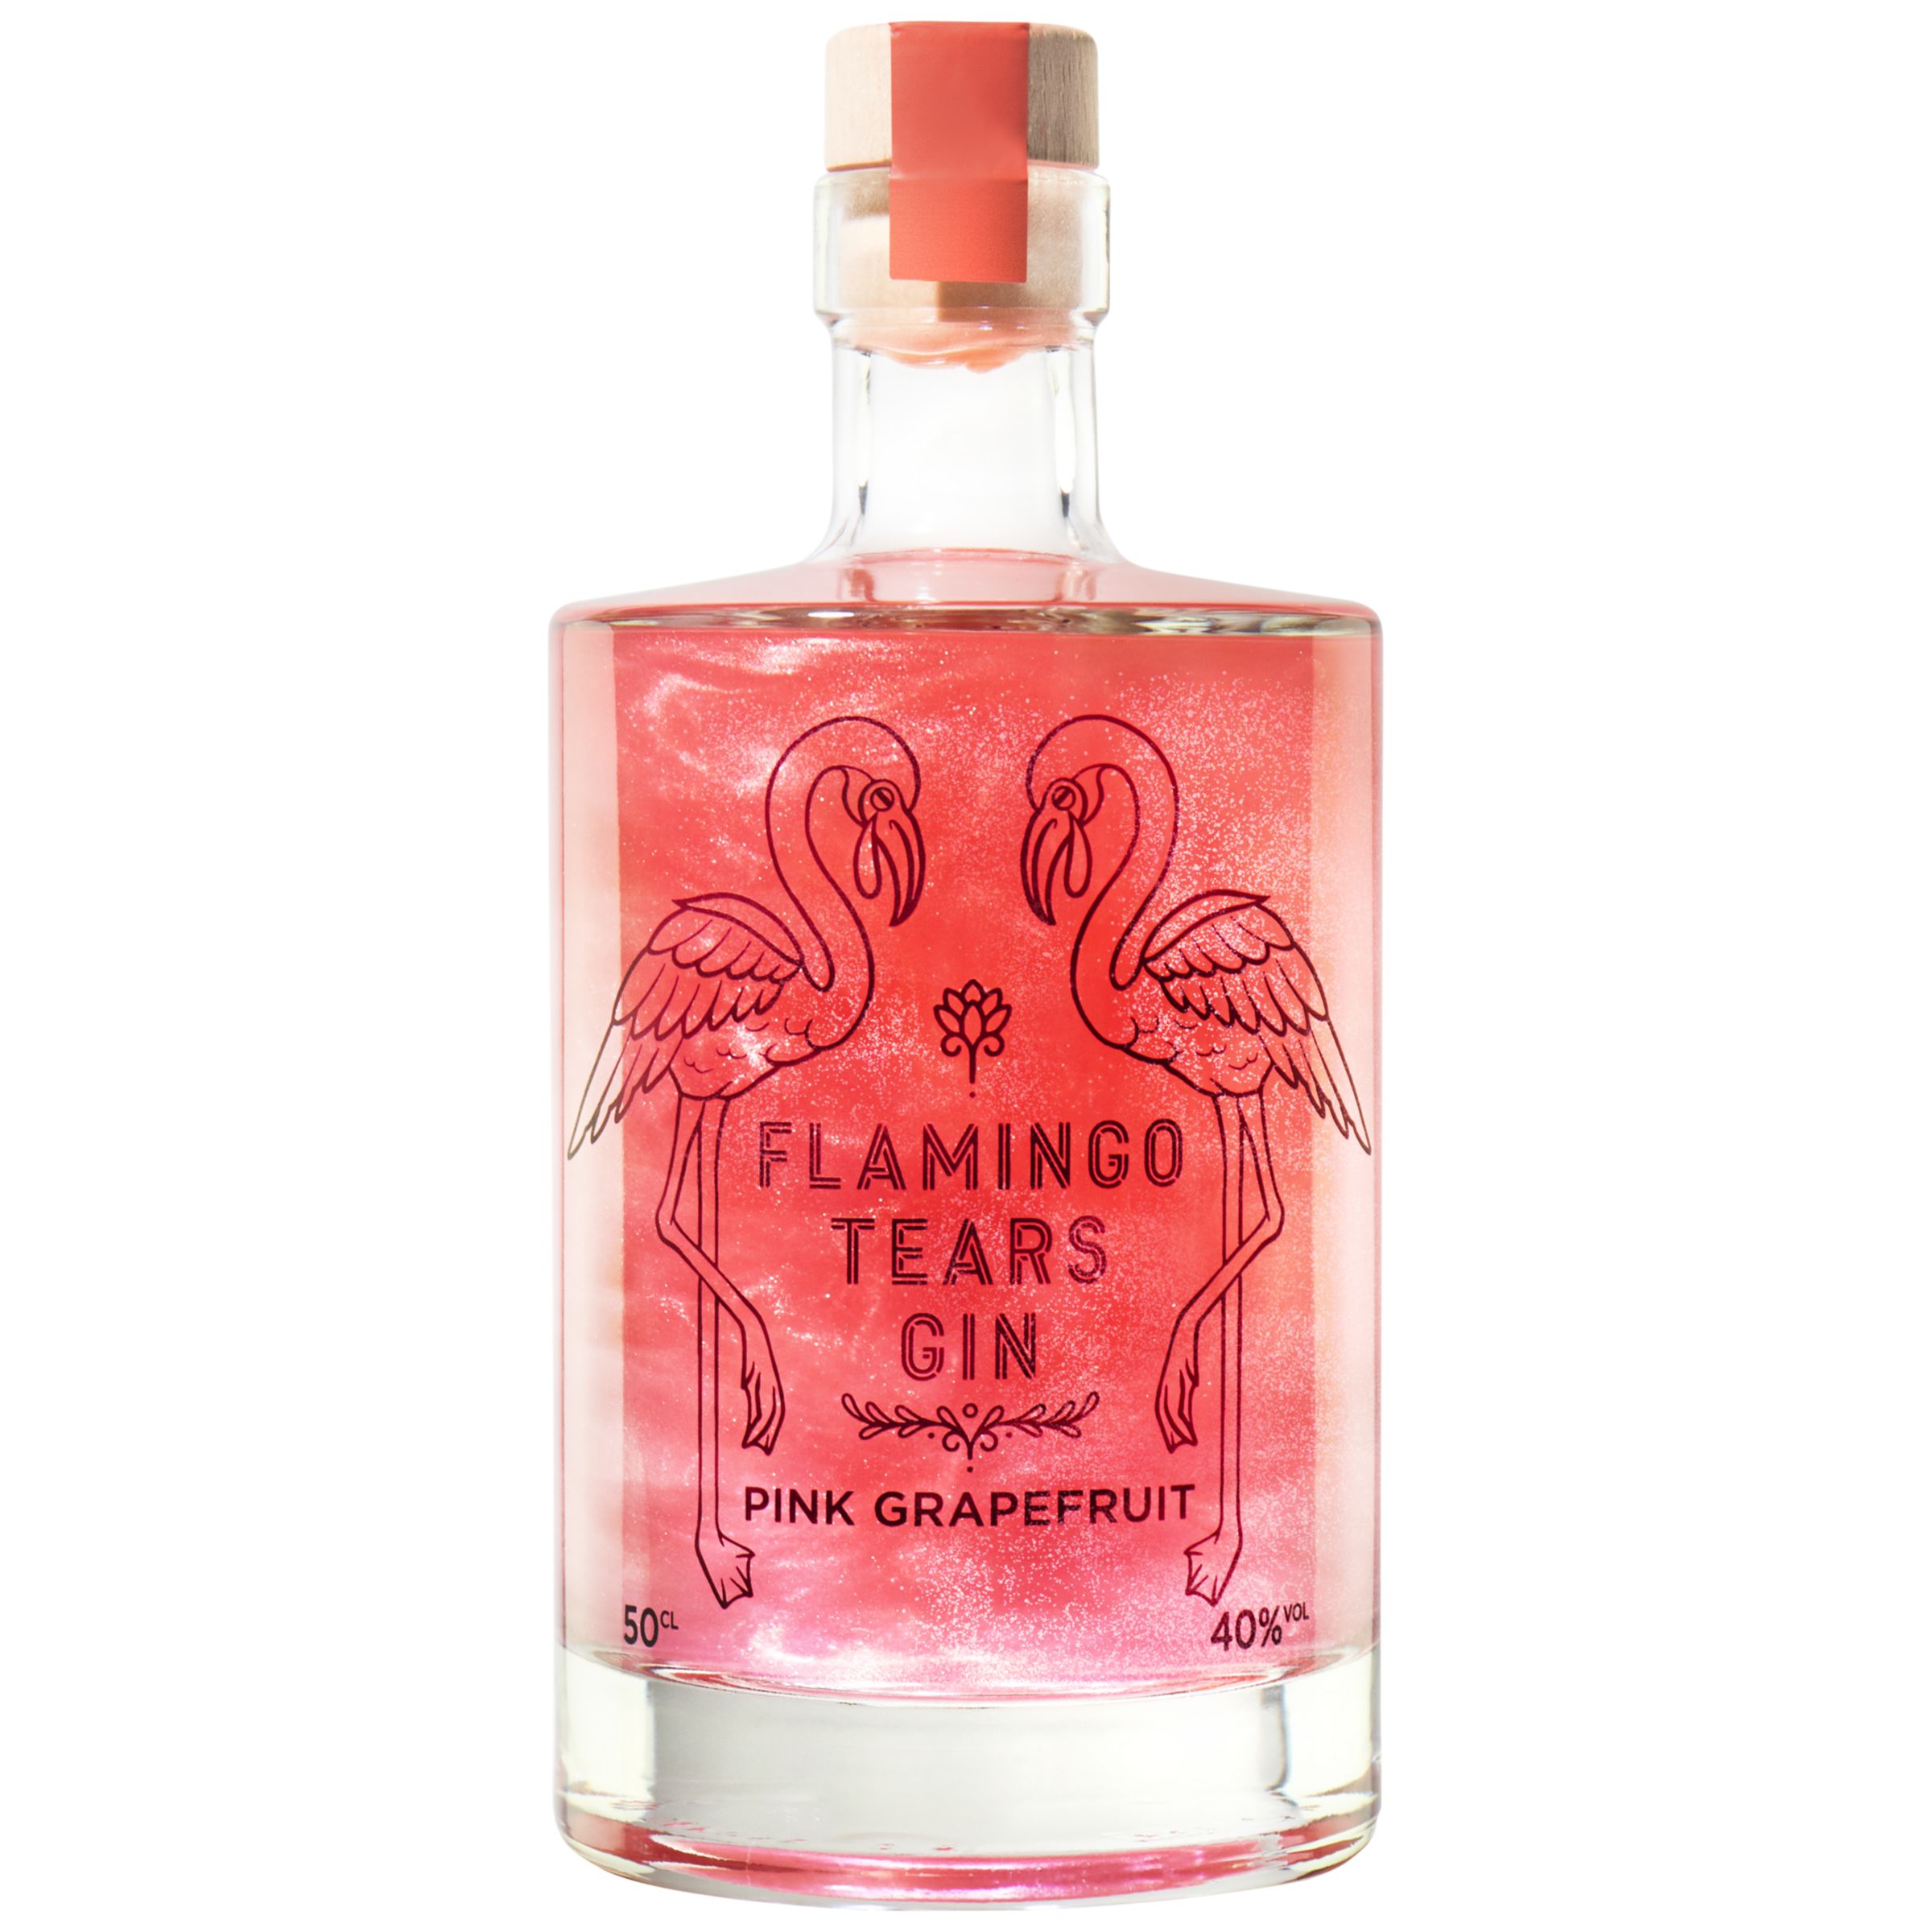 Gin, Firebox Tears 50cl Flamingo Pink Grapefruit